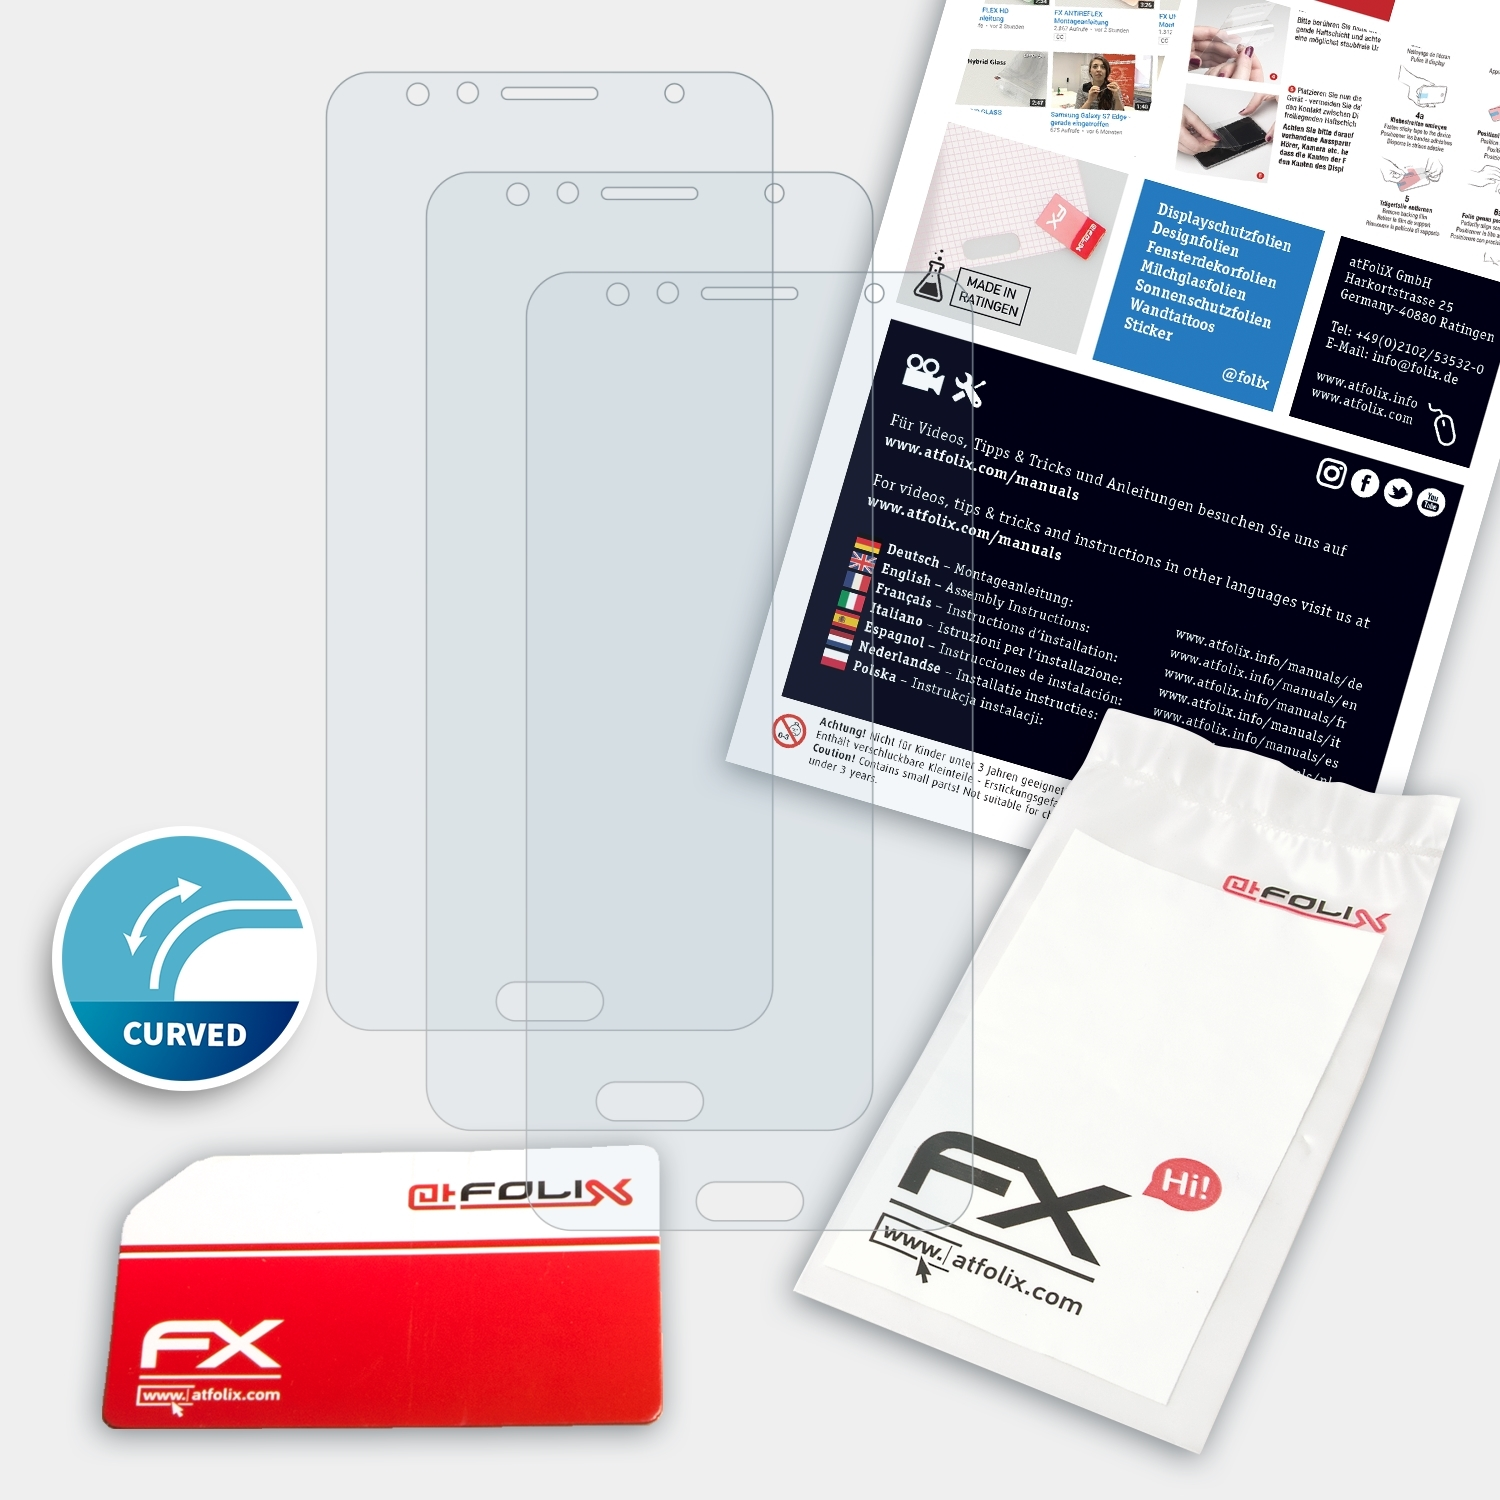 Nova FX-ActiFleX Huawei ATFOLIX 3x Displayschutz(für 2S)